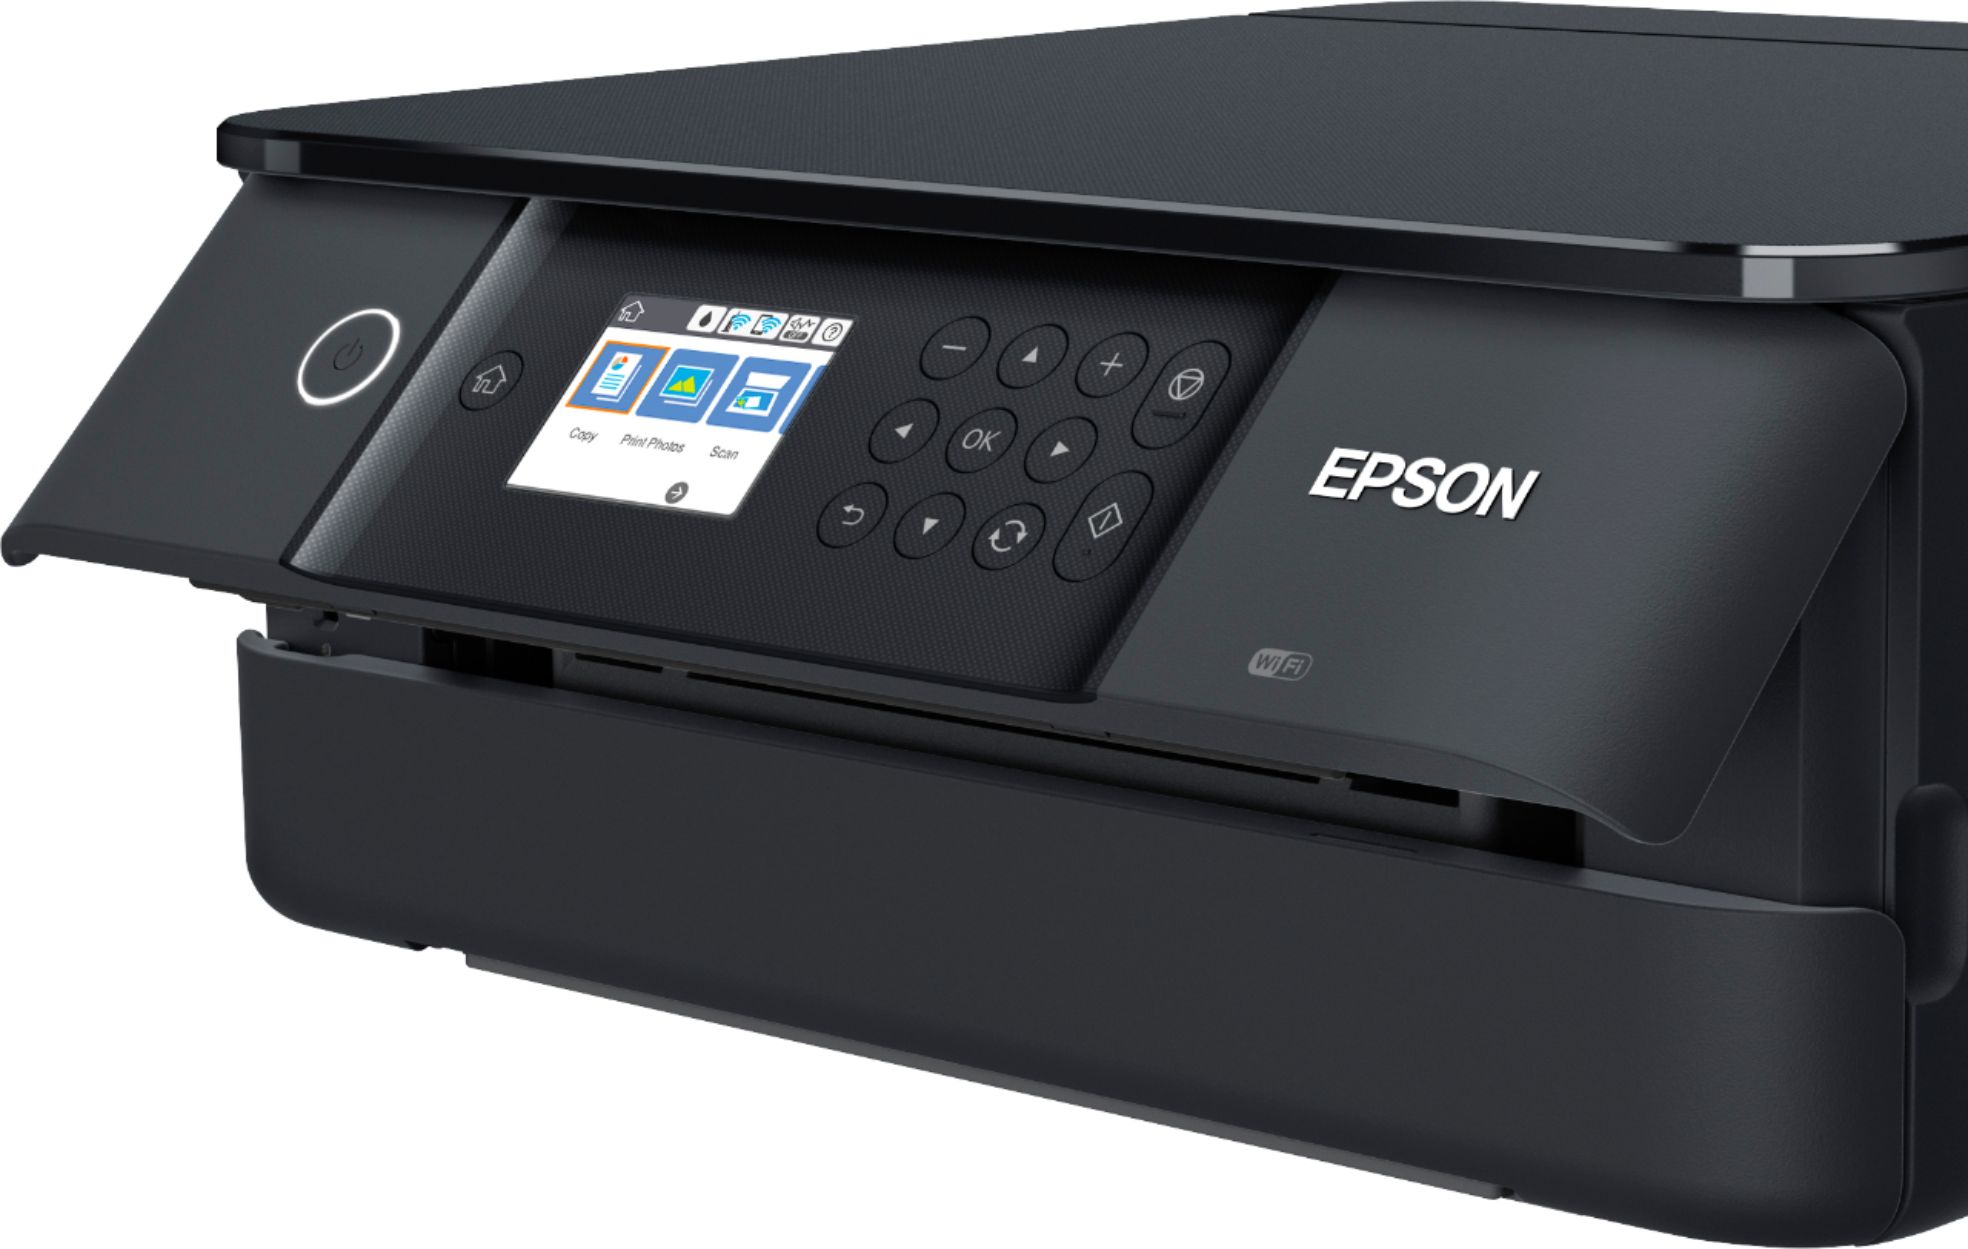 Epson Expression Premium XP-6100 Wireless All-In-One Inkjet Printer Black  EPSON XP-6100 C11CG29201 - Best Buy